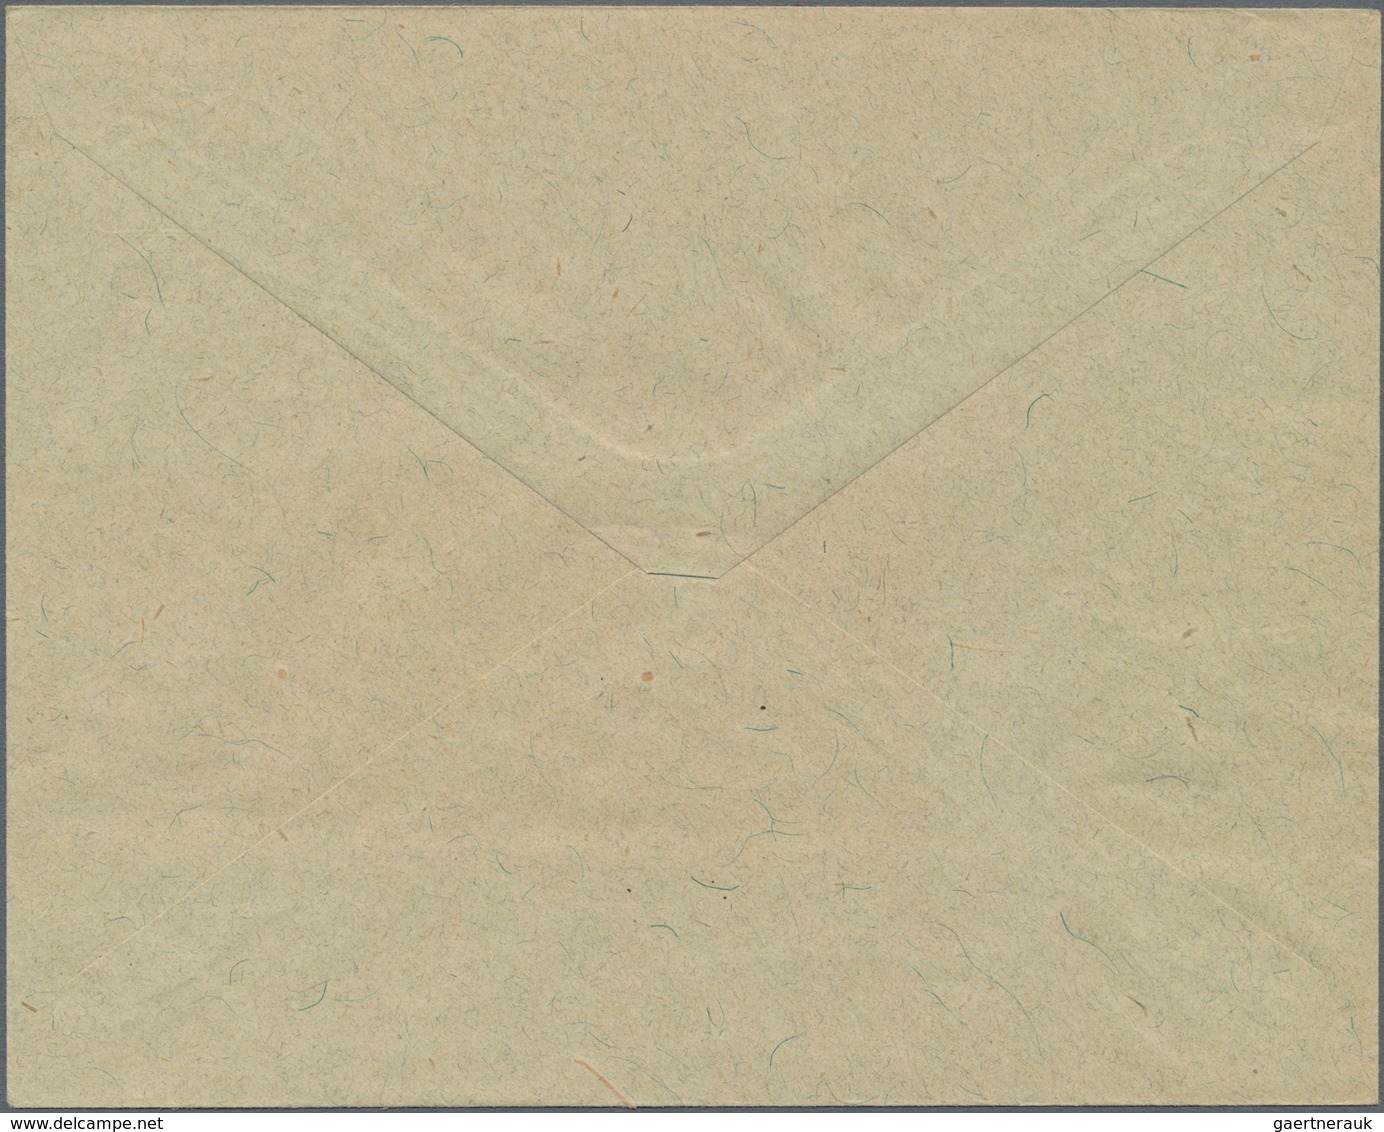 Thematik: Öl / Oil: 1916, German Reich. Very Rare Private Envelope 15pf Light Brown Germania With Fo - Erdöl